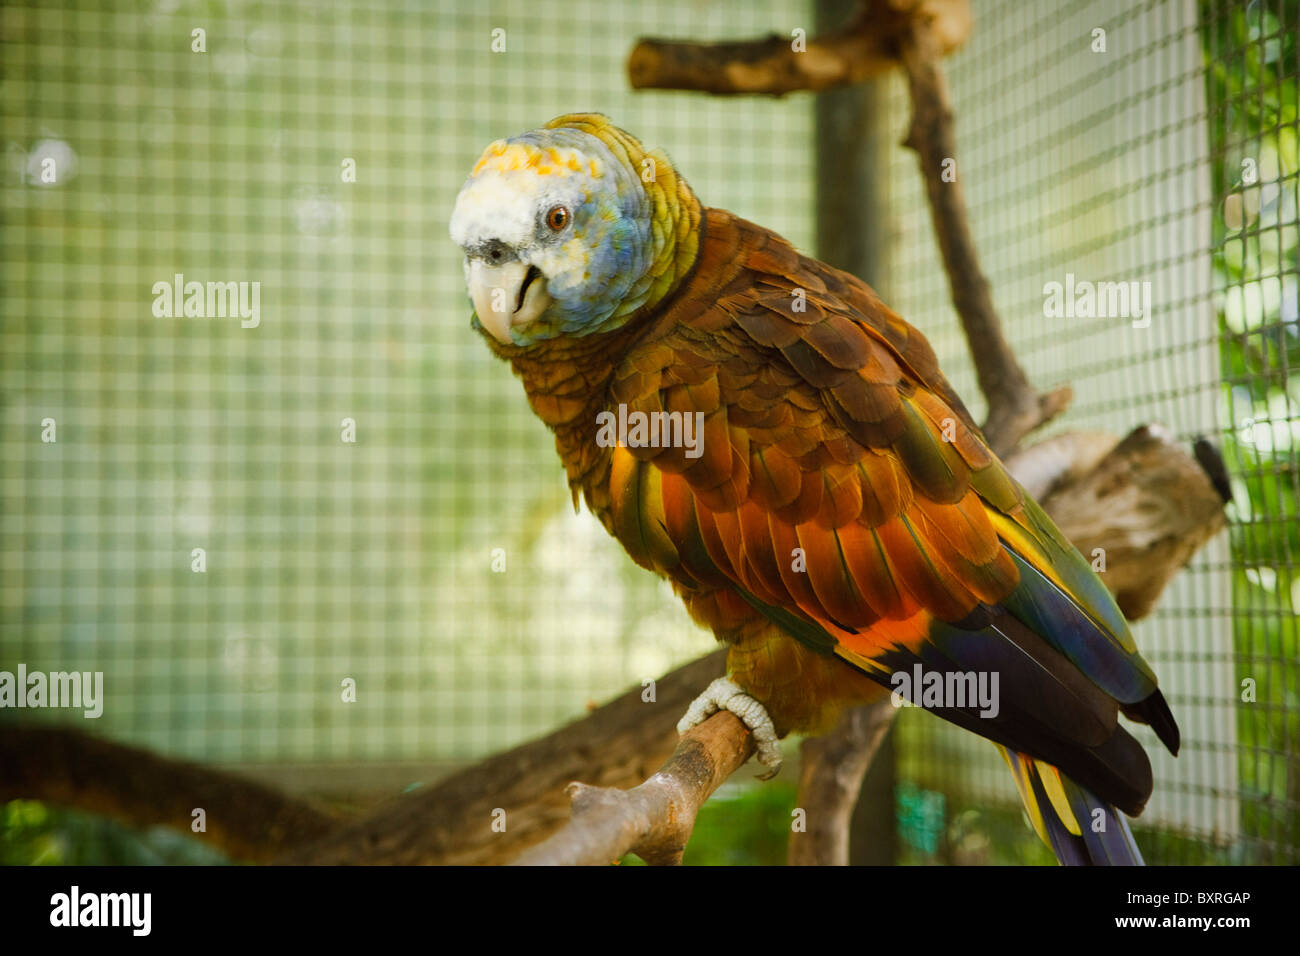 St Vincent parrot, endangered species Stock Photo